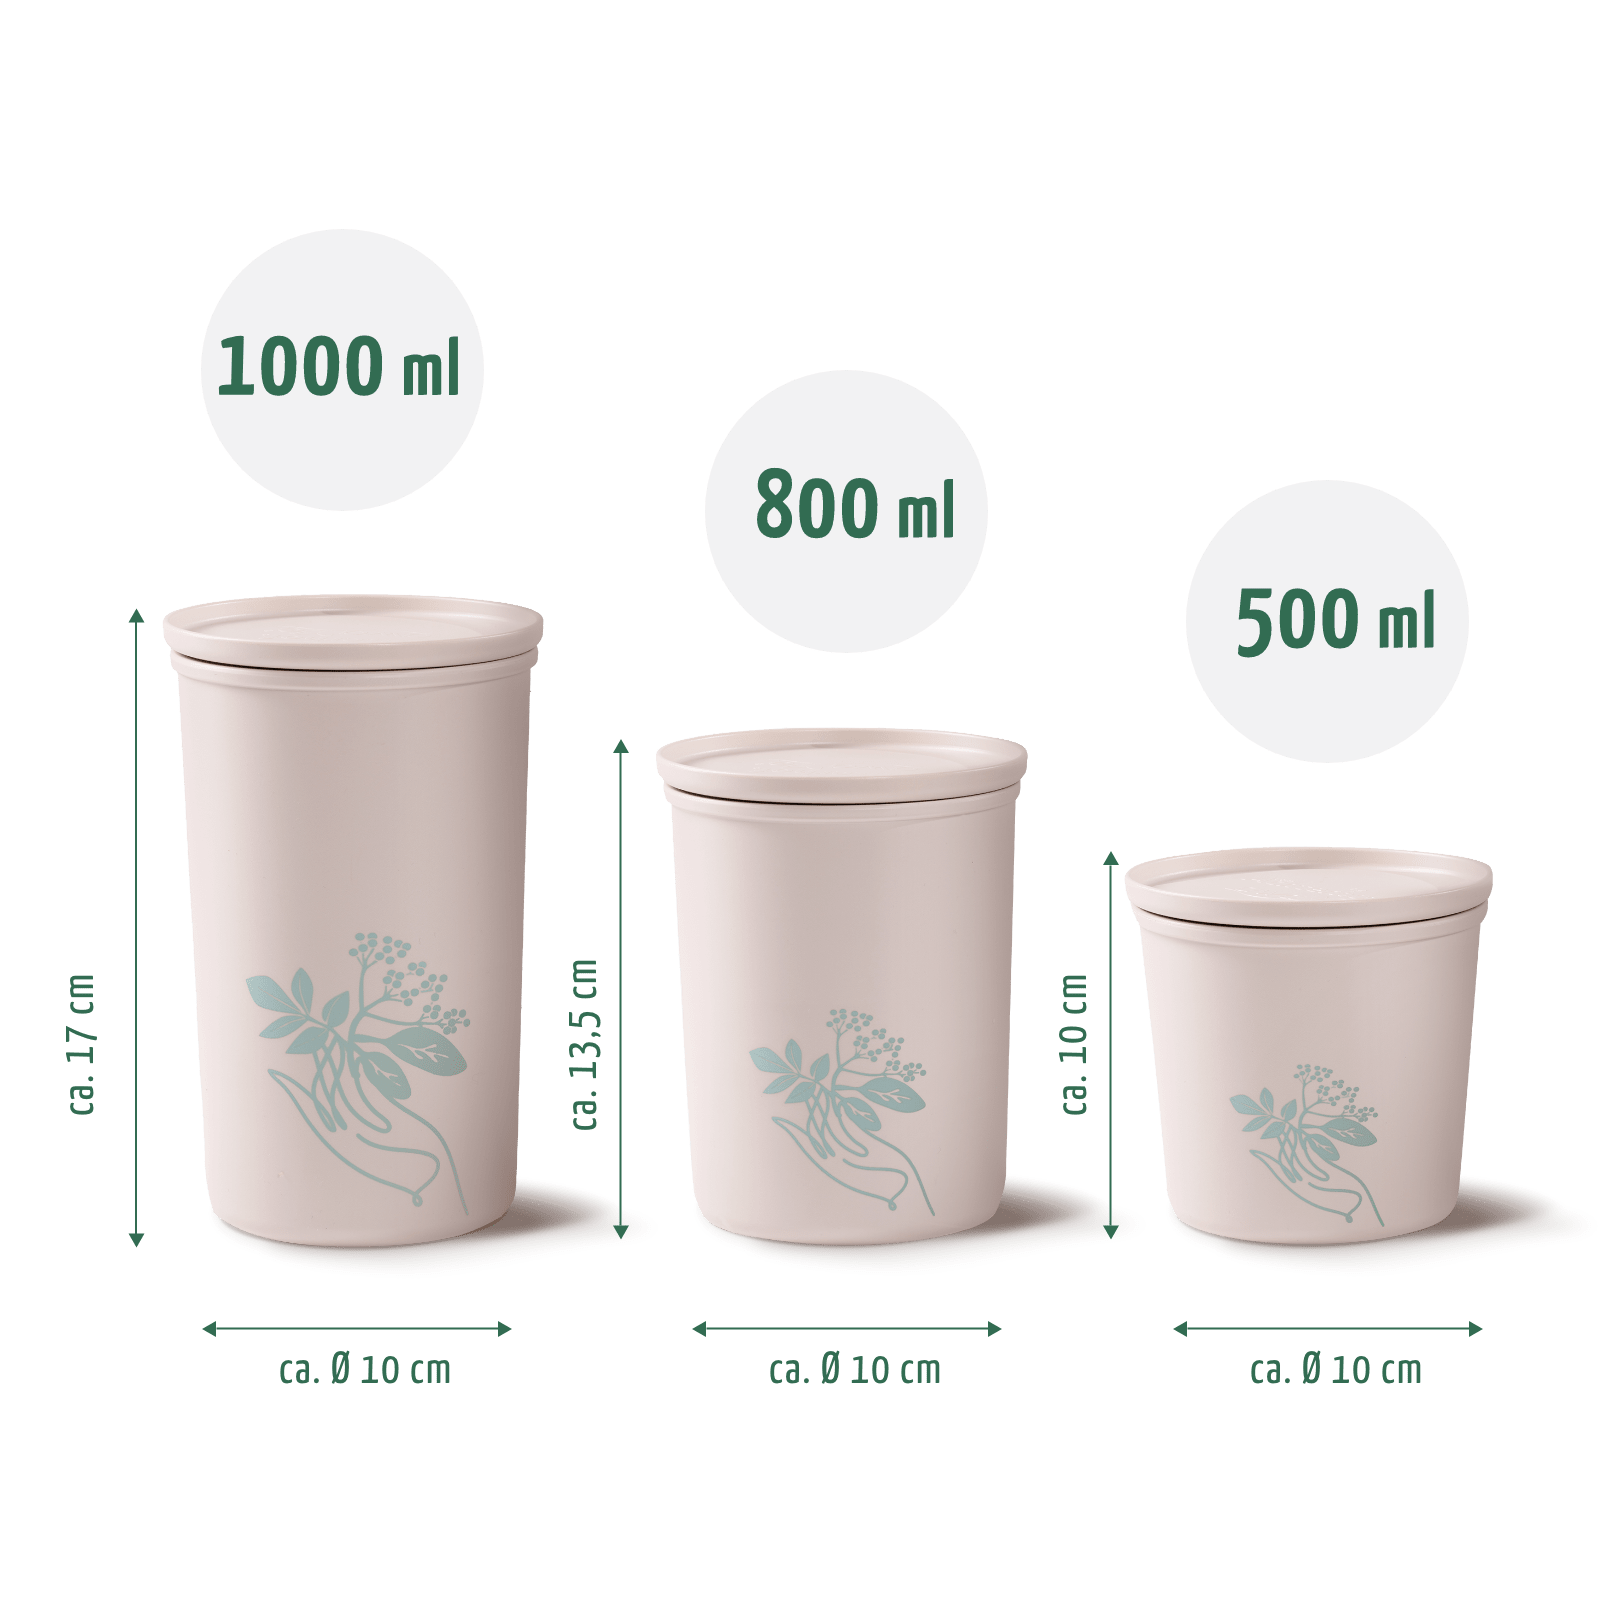 Frischhaltedosen 3er-Set aus recyceltem Kunststoff (rPET) | Vorratsdosen